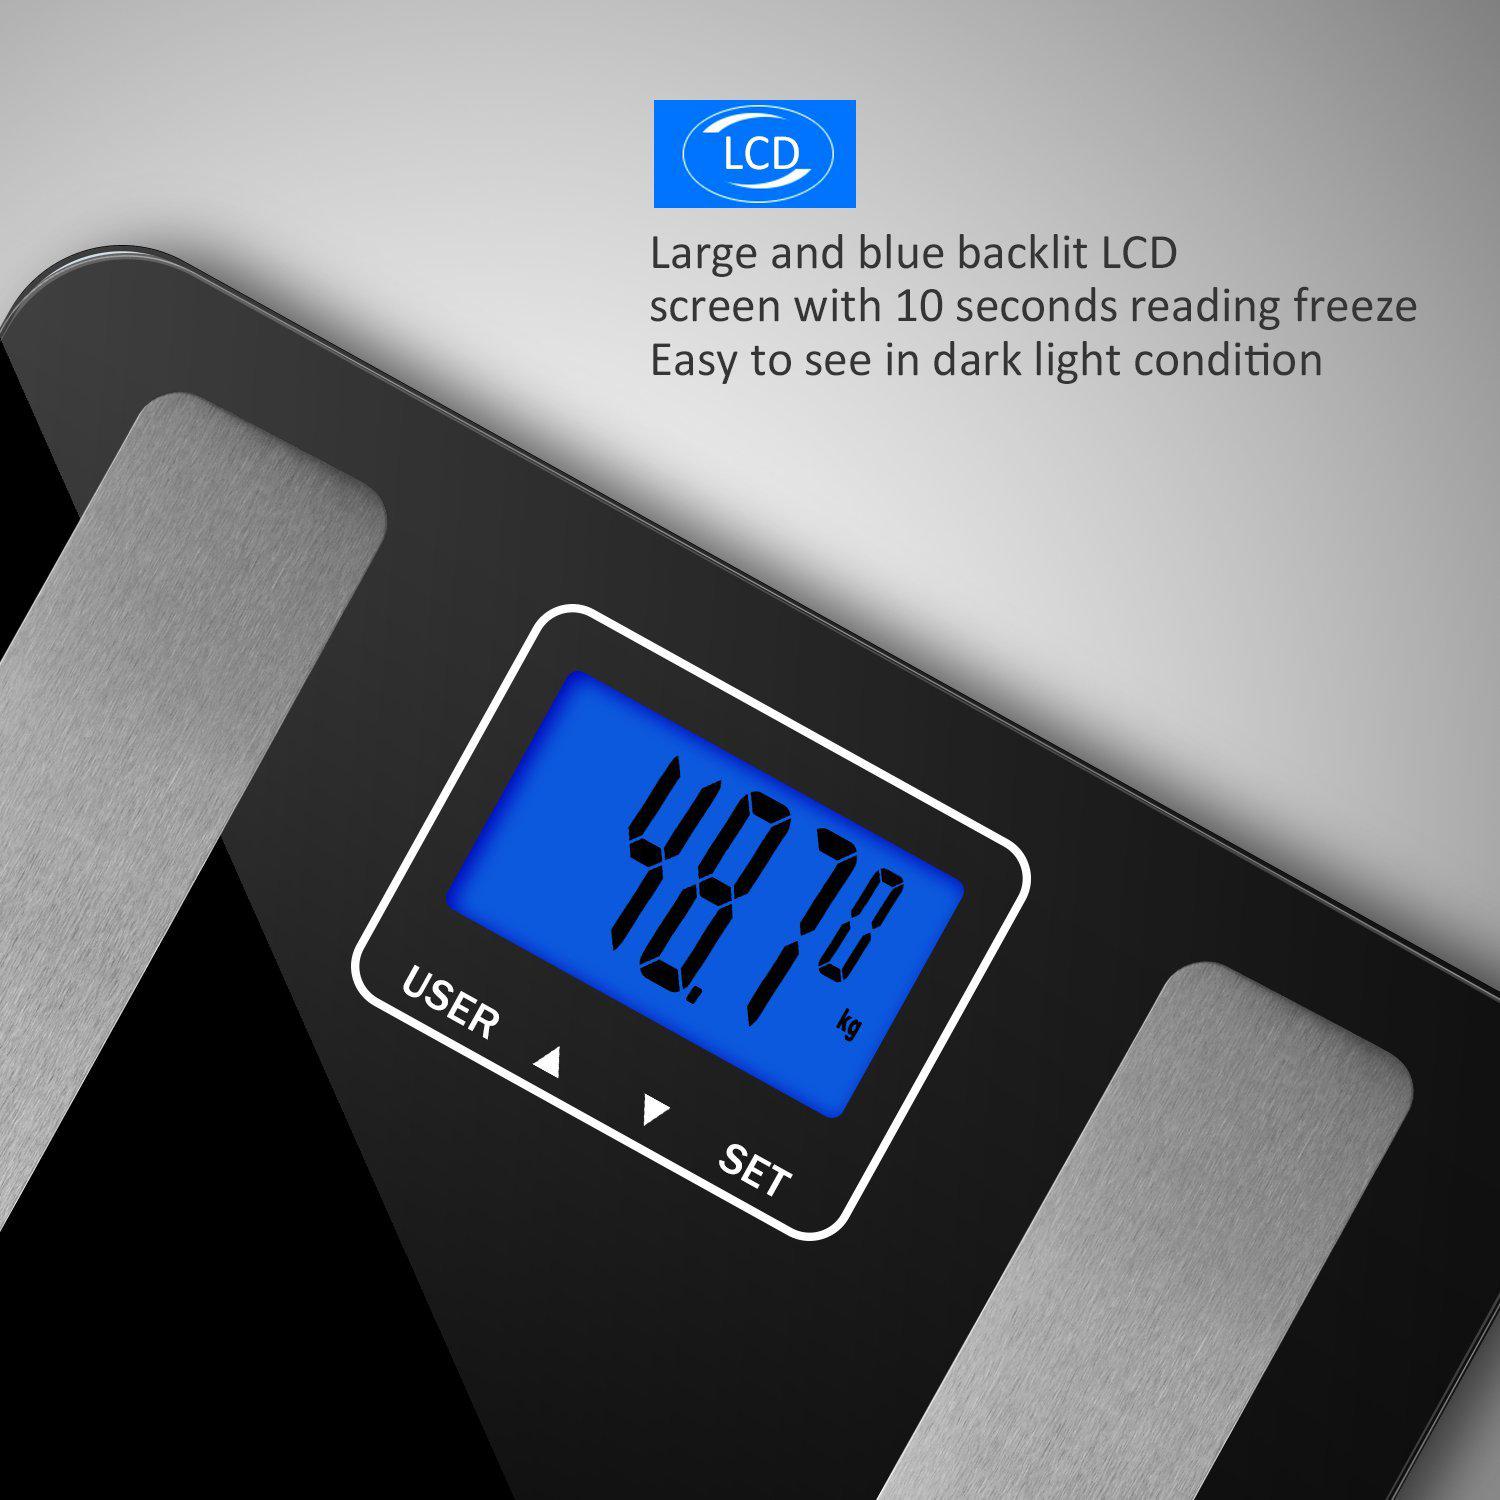 Vitafit Digital Smart Body Fat Scale and Body Weight Scale